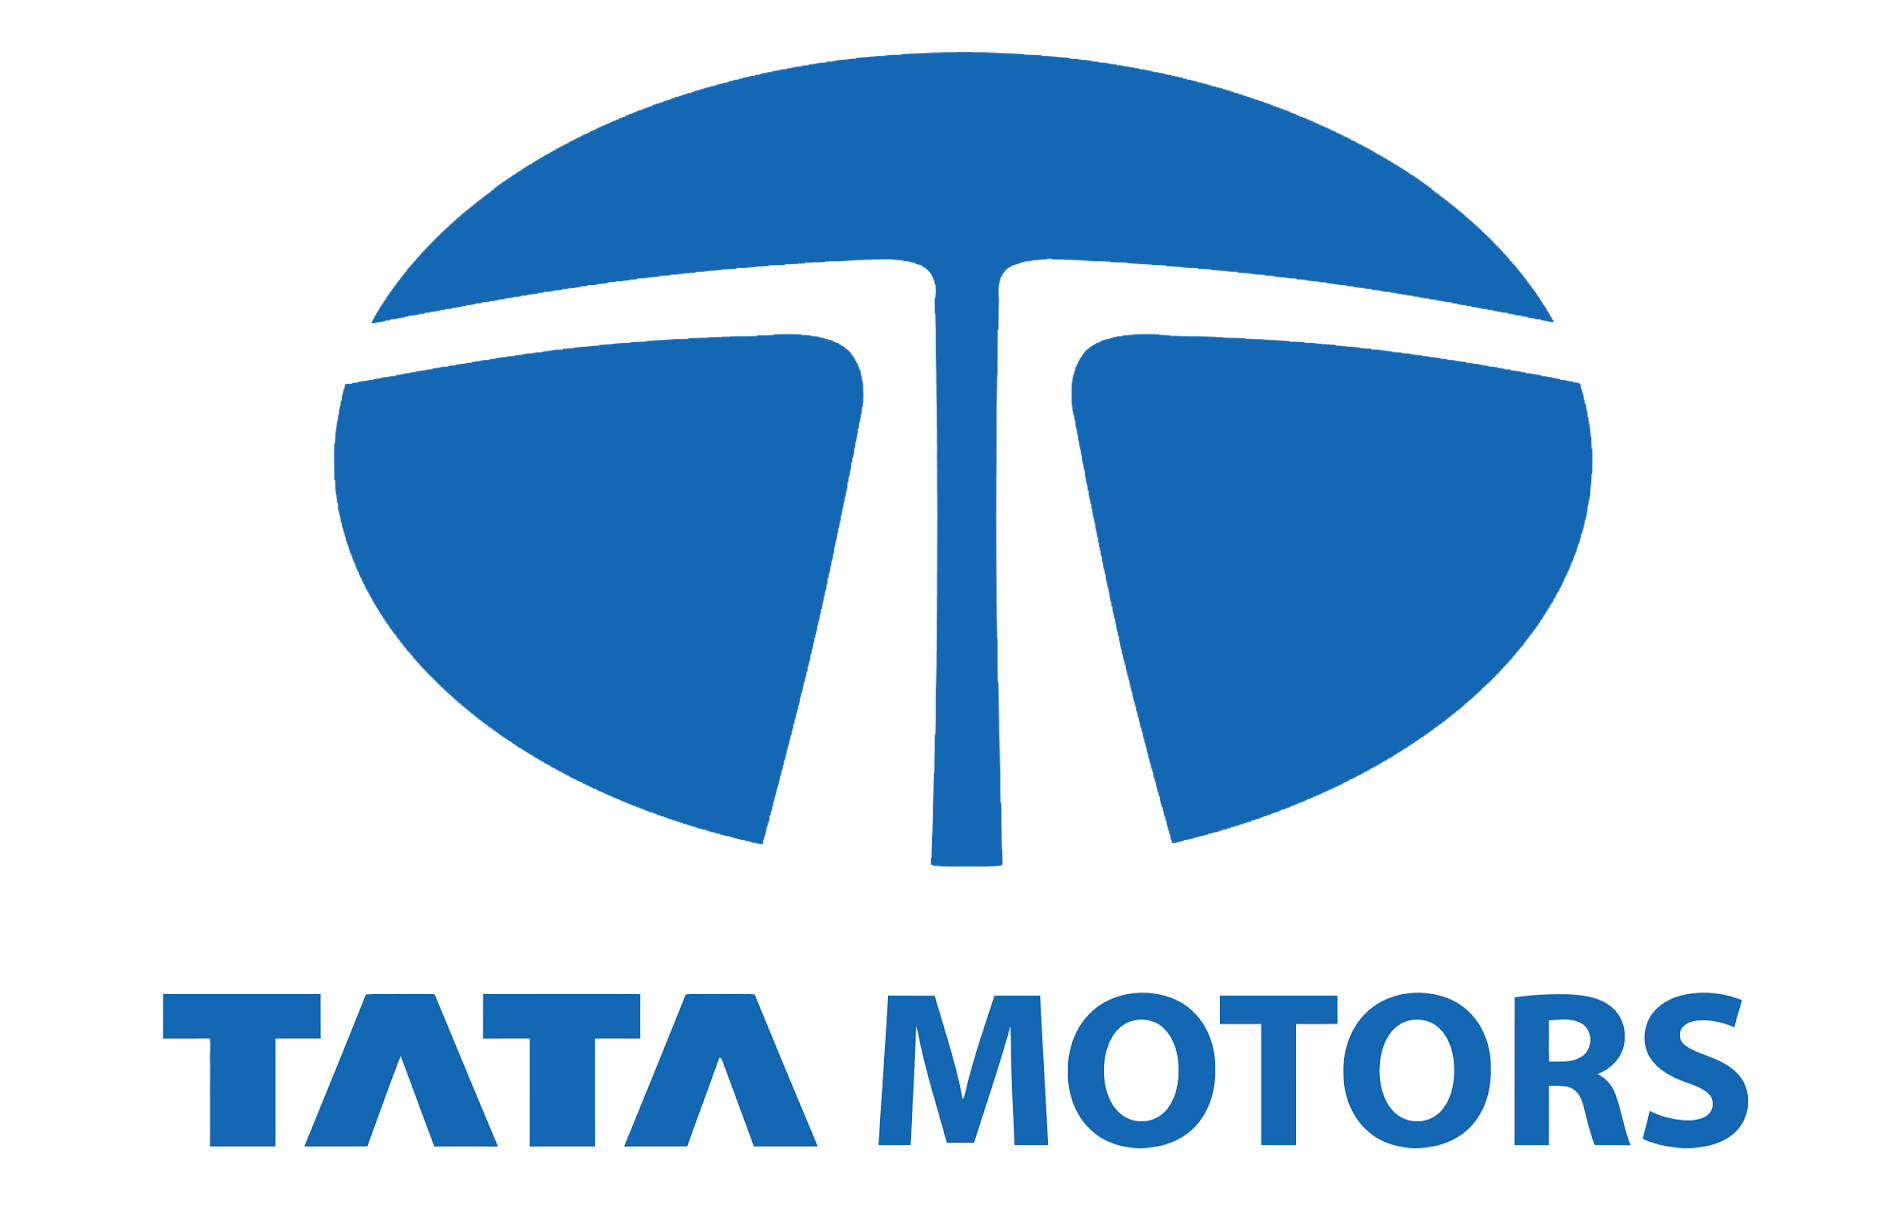 Tata Motors Cars Showroom - Adishakti Cars|Show Room|Automotive